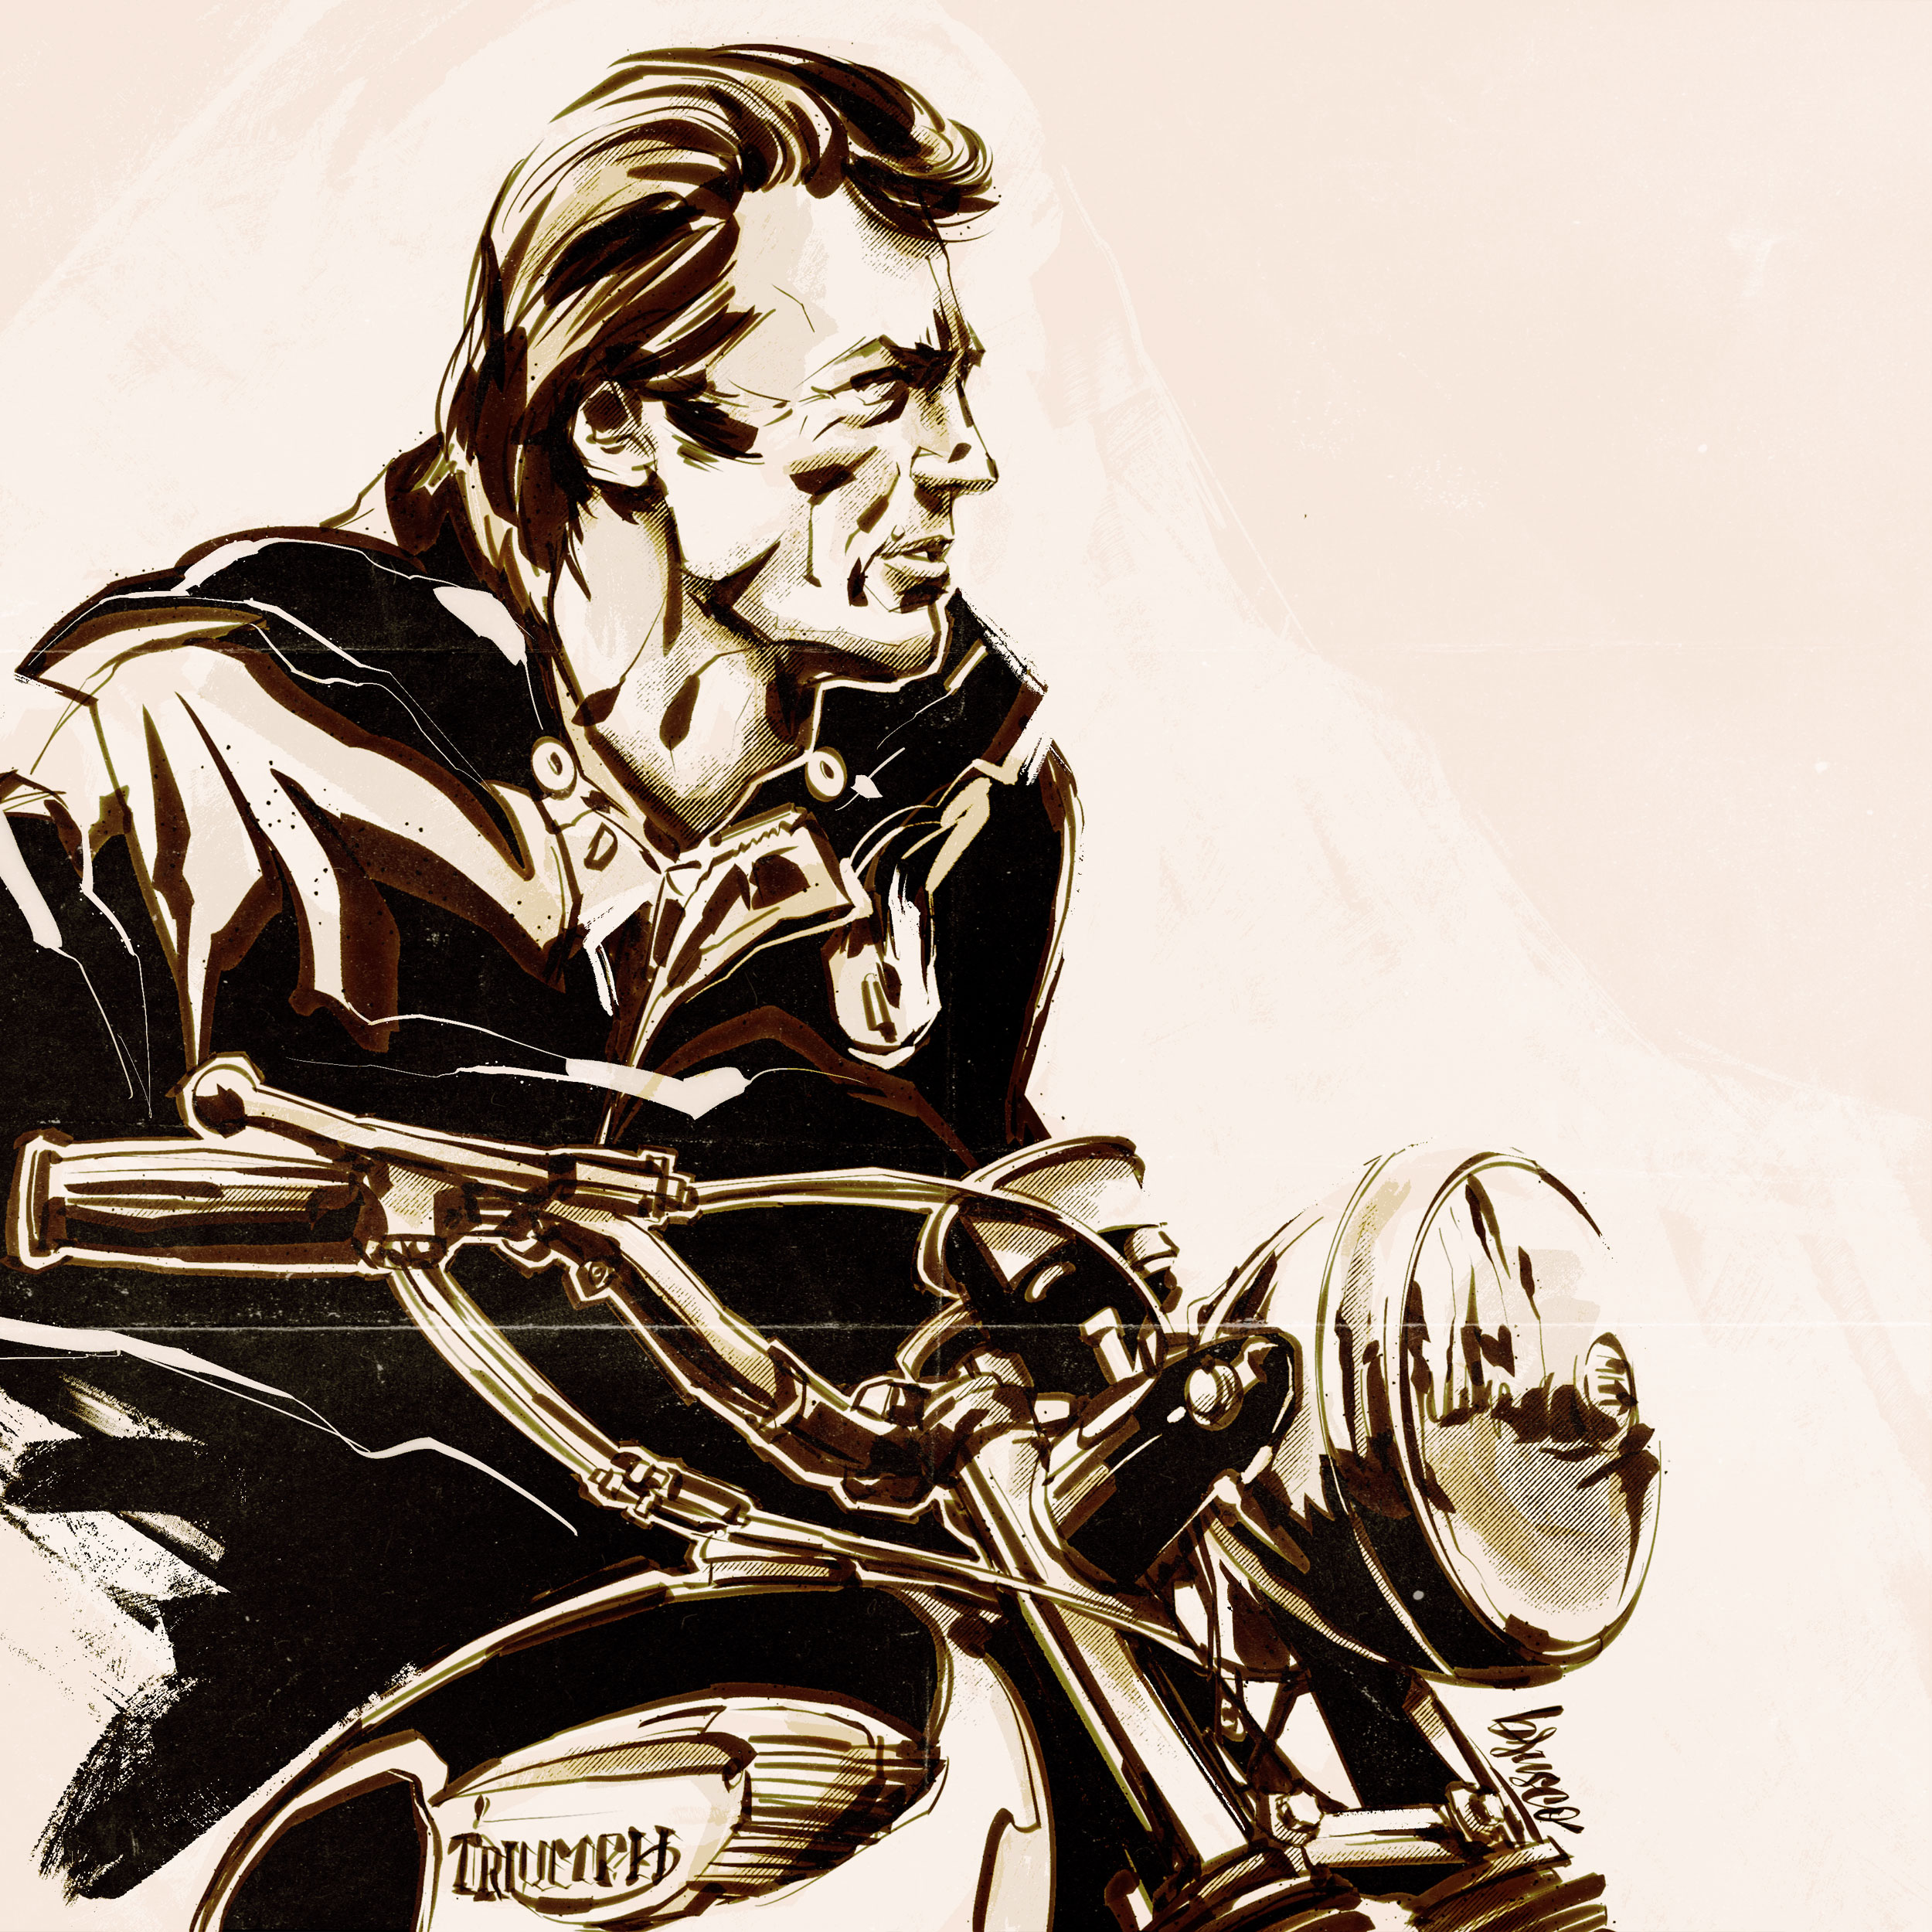 Clint Eastwood & Triumph byBrusco